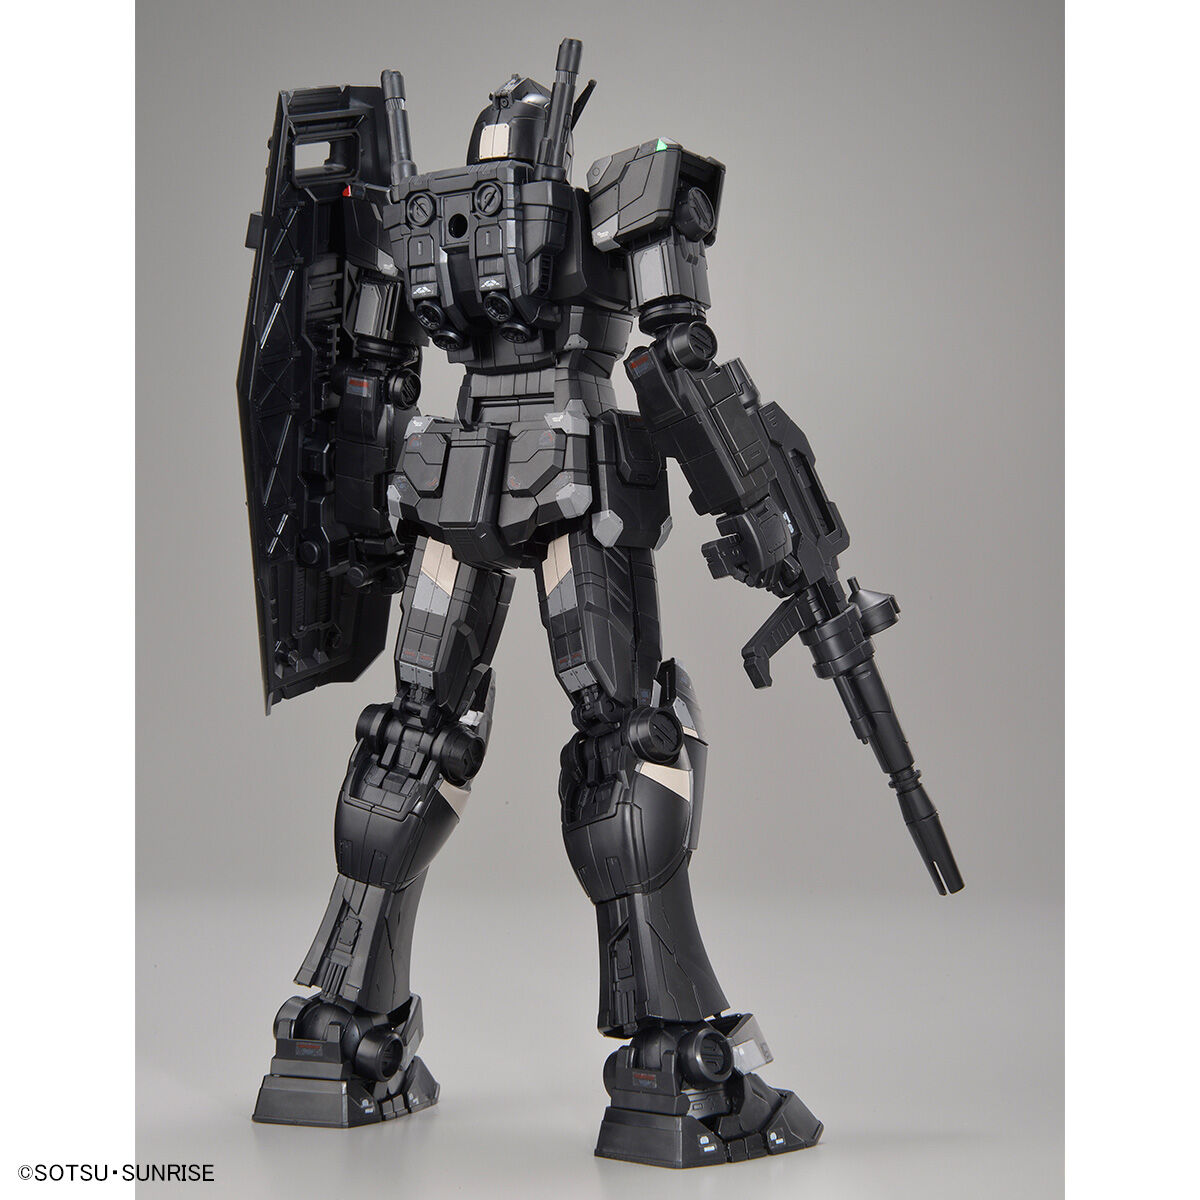 GUNDAM FACTORY YOKOHAMA dedicated eco plastic 1/100 RX-78F00 Gundam